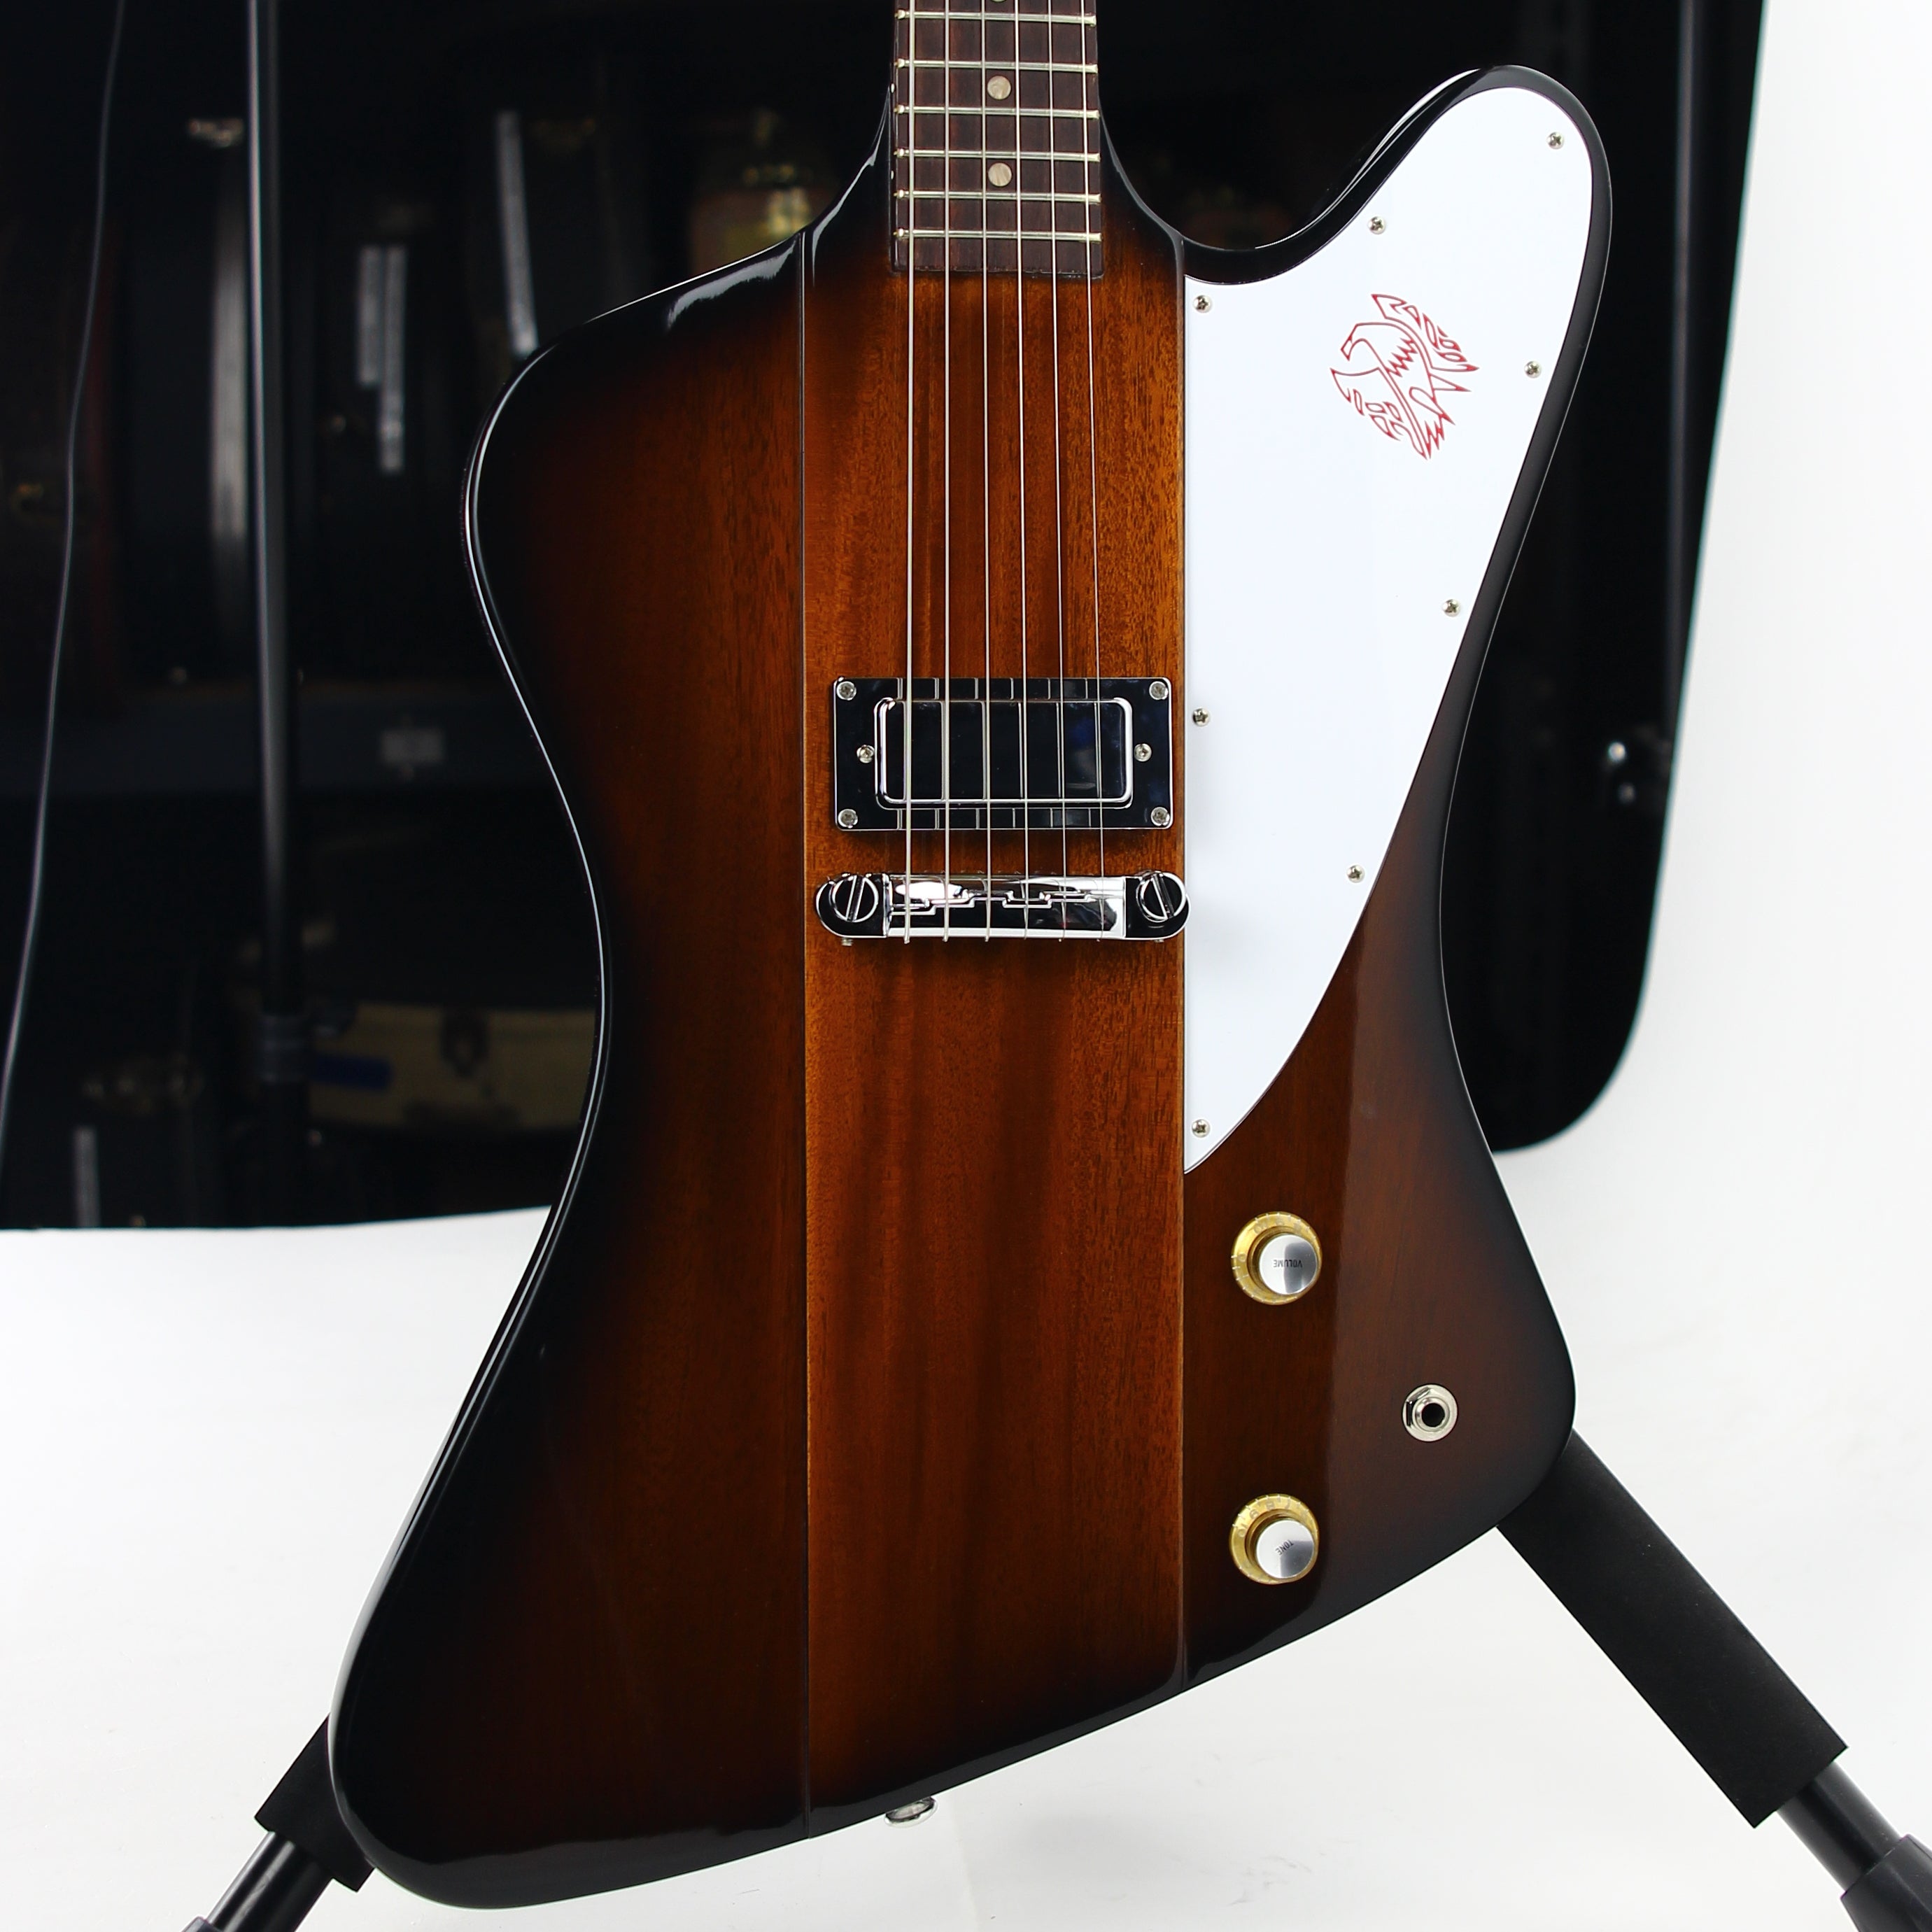 *SOLD*  2019 Gibson Exclusive Firebird I Limited Edition Vintage Sunburst - One Mini Humbucker ala Eric Clapton!